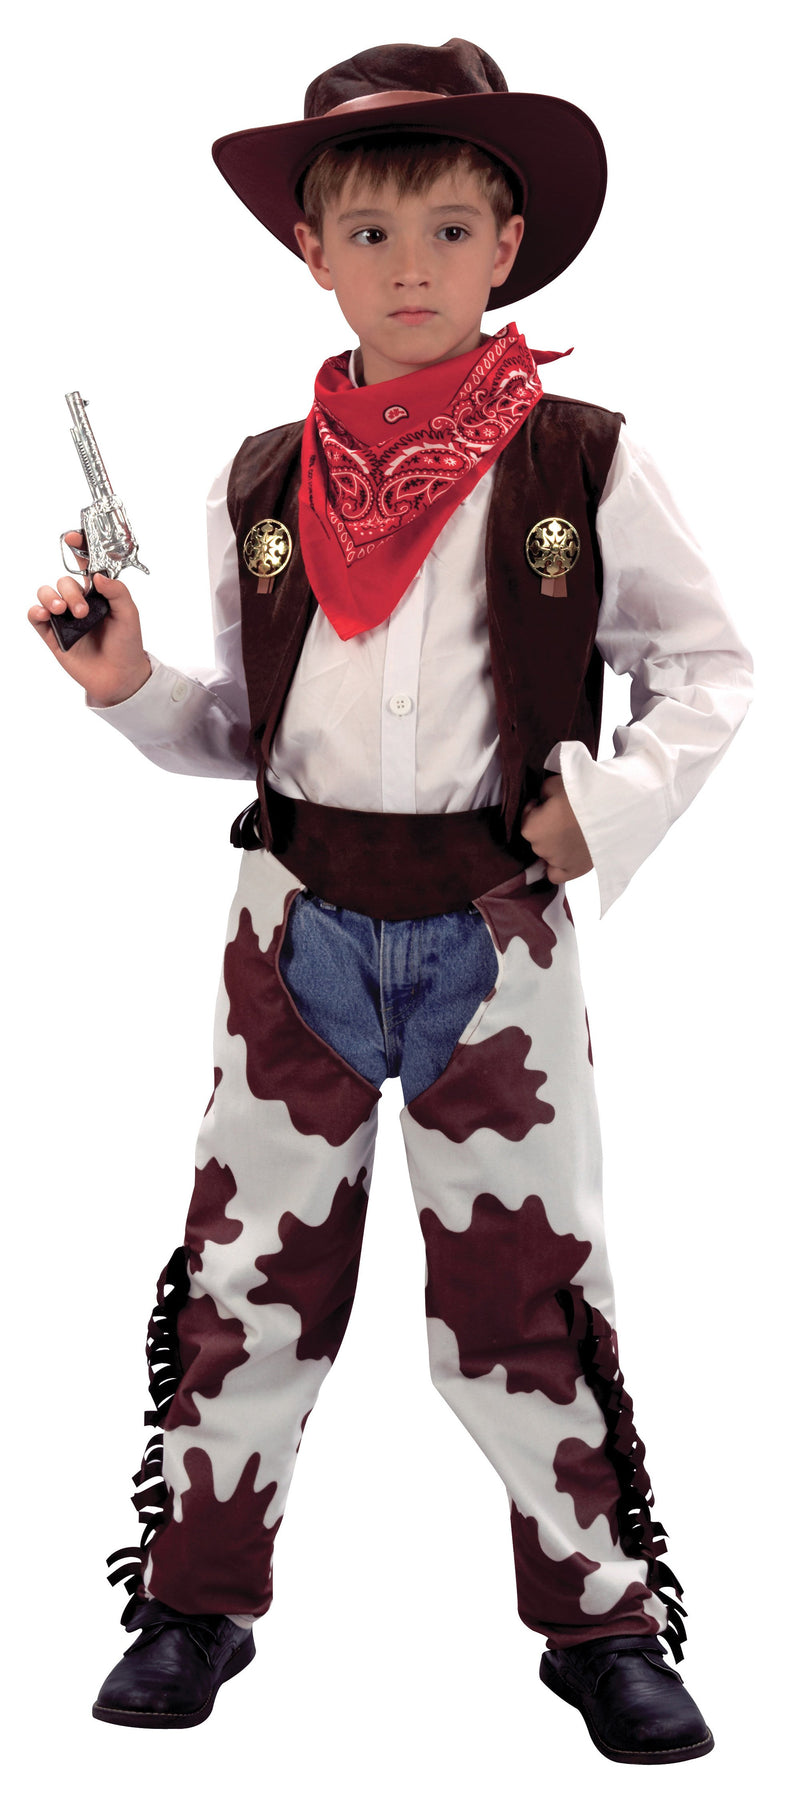 Cowboy Xlcowprint Chaps White Brown Childrens Costumes Male Xl Boys Bristol Novelty Childrens Costumes 2280